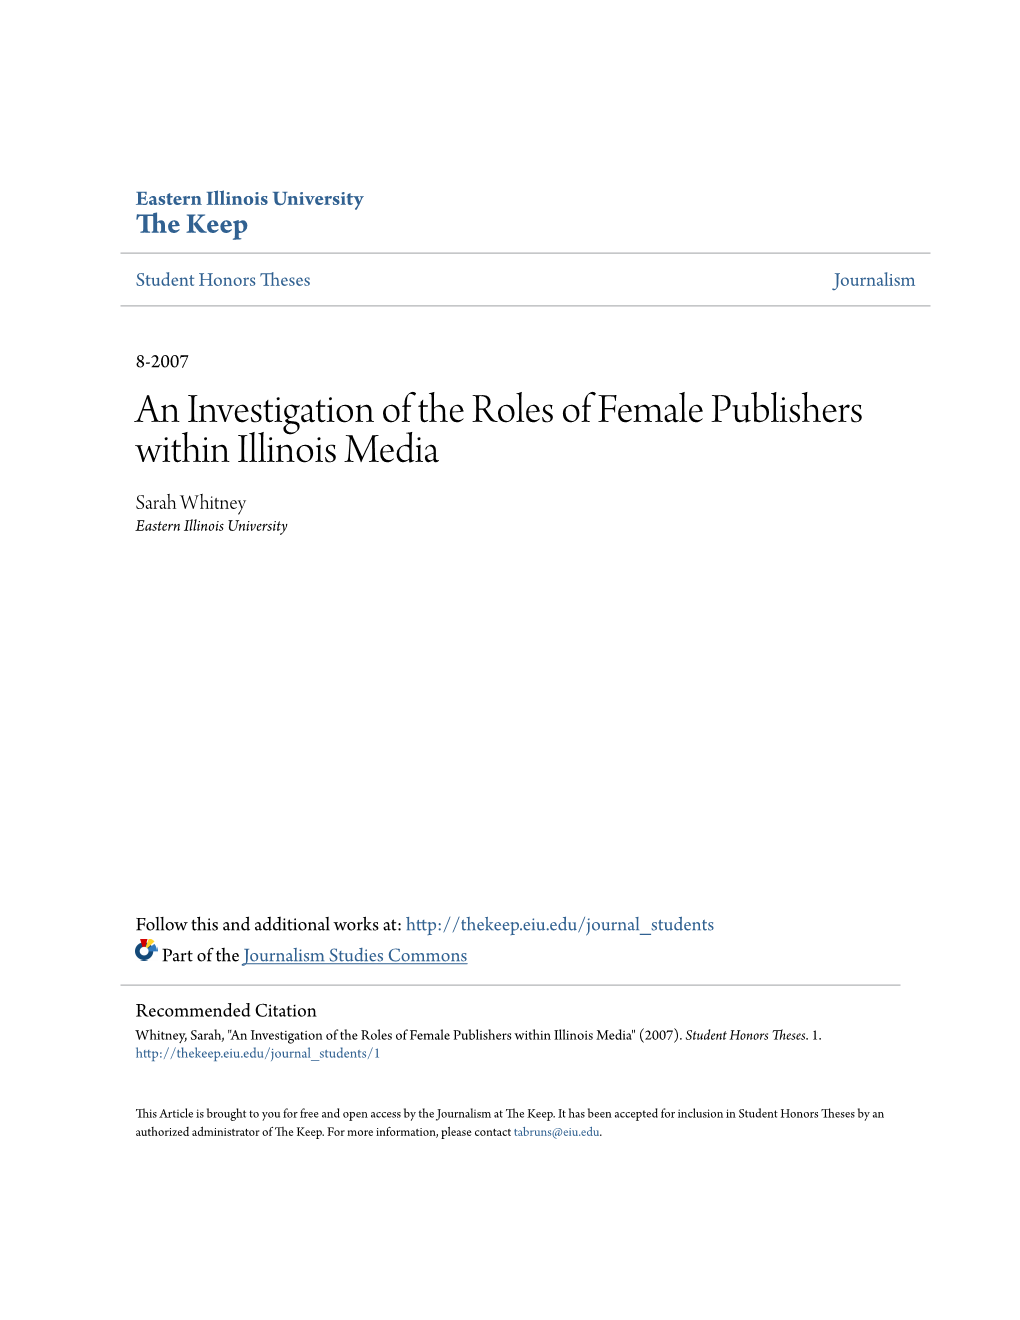 An Investigation of the Roles of Female Publishers Within Illinois Media Sarah Whitney Eastern Illinois University